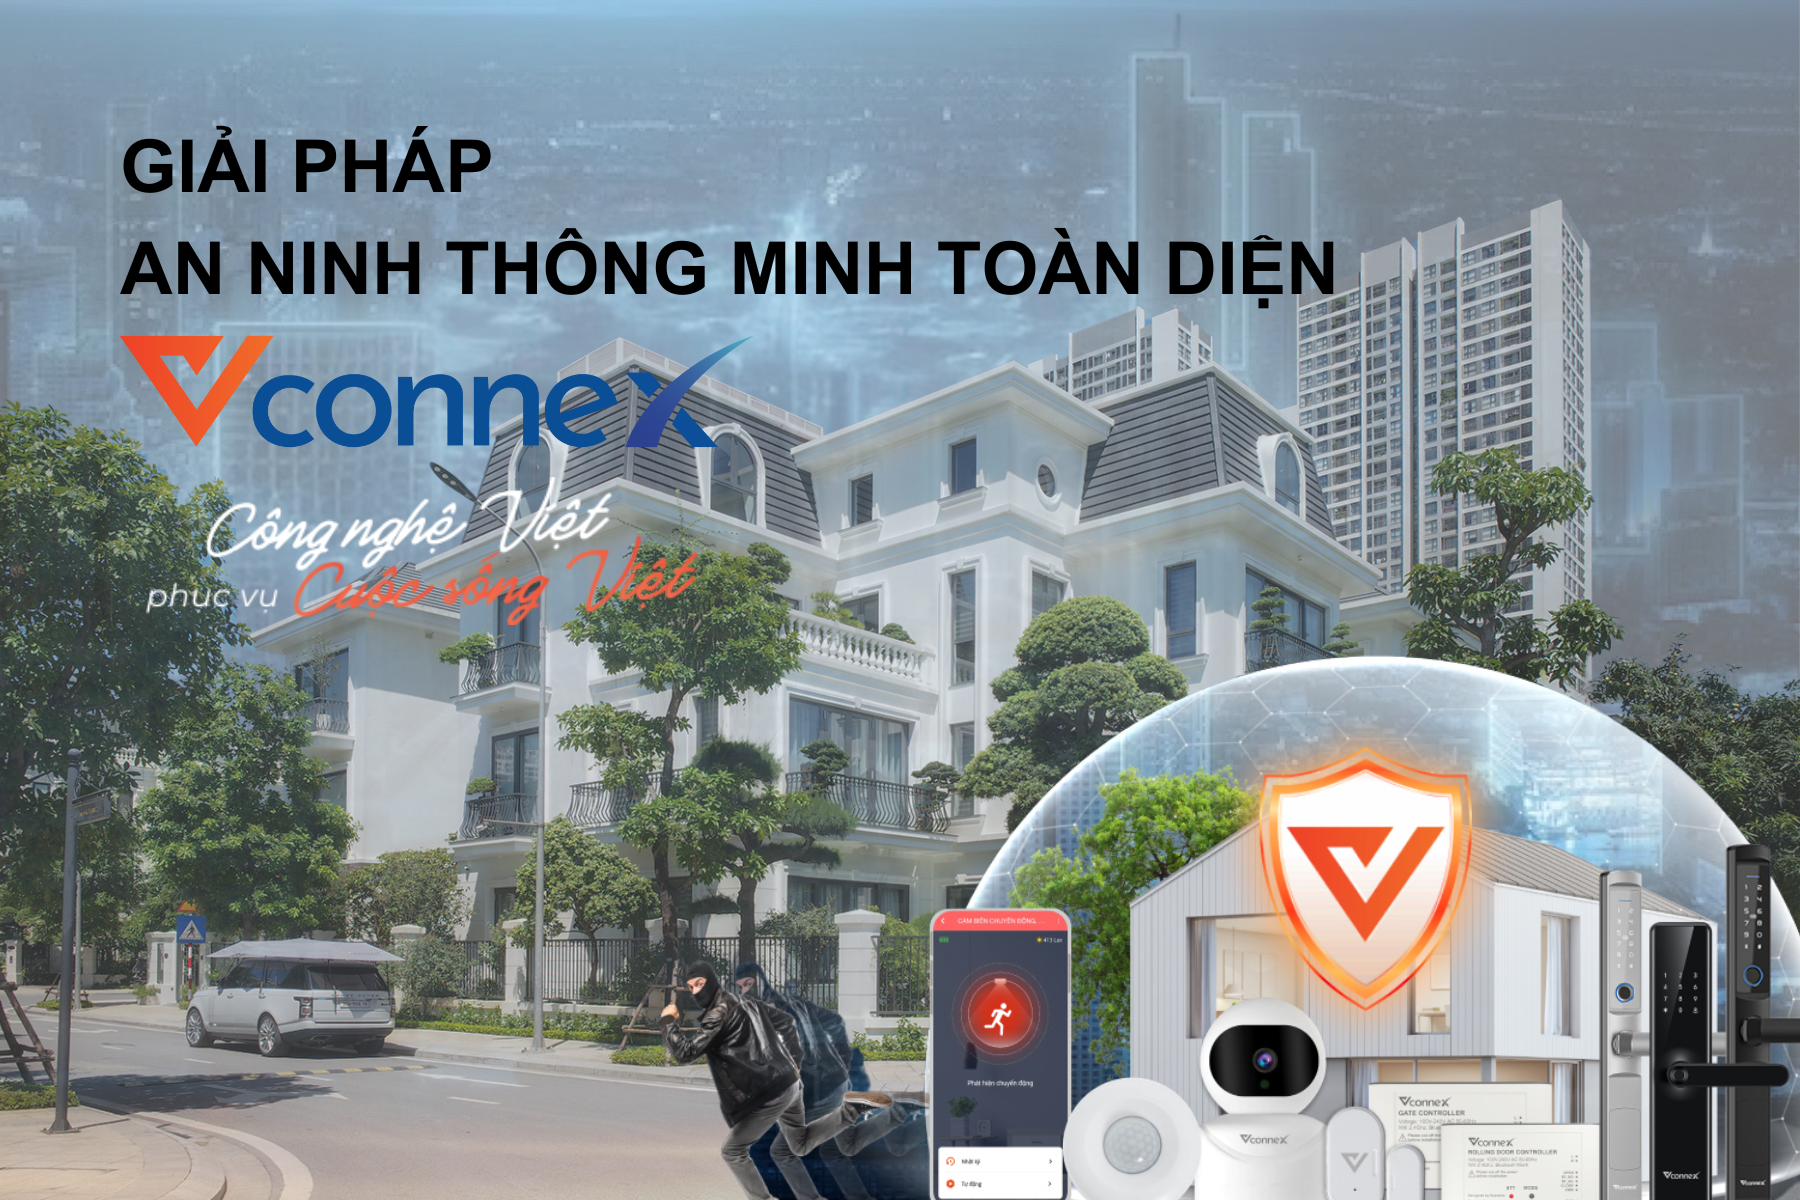 Giai-phap-An-ninh-thong-minh-toan-dien-Vconnex-Cover